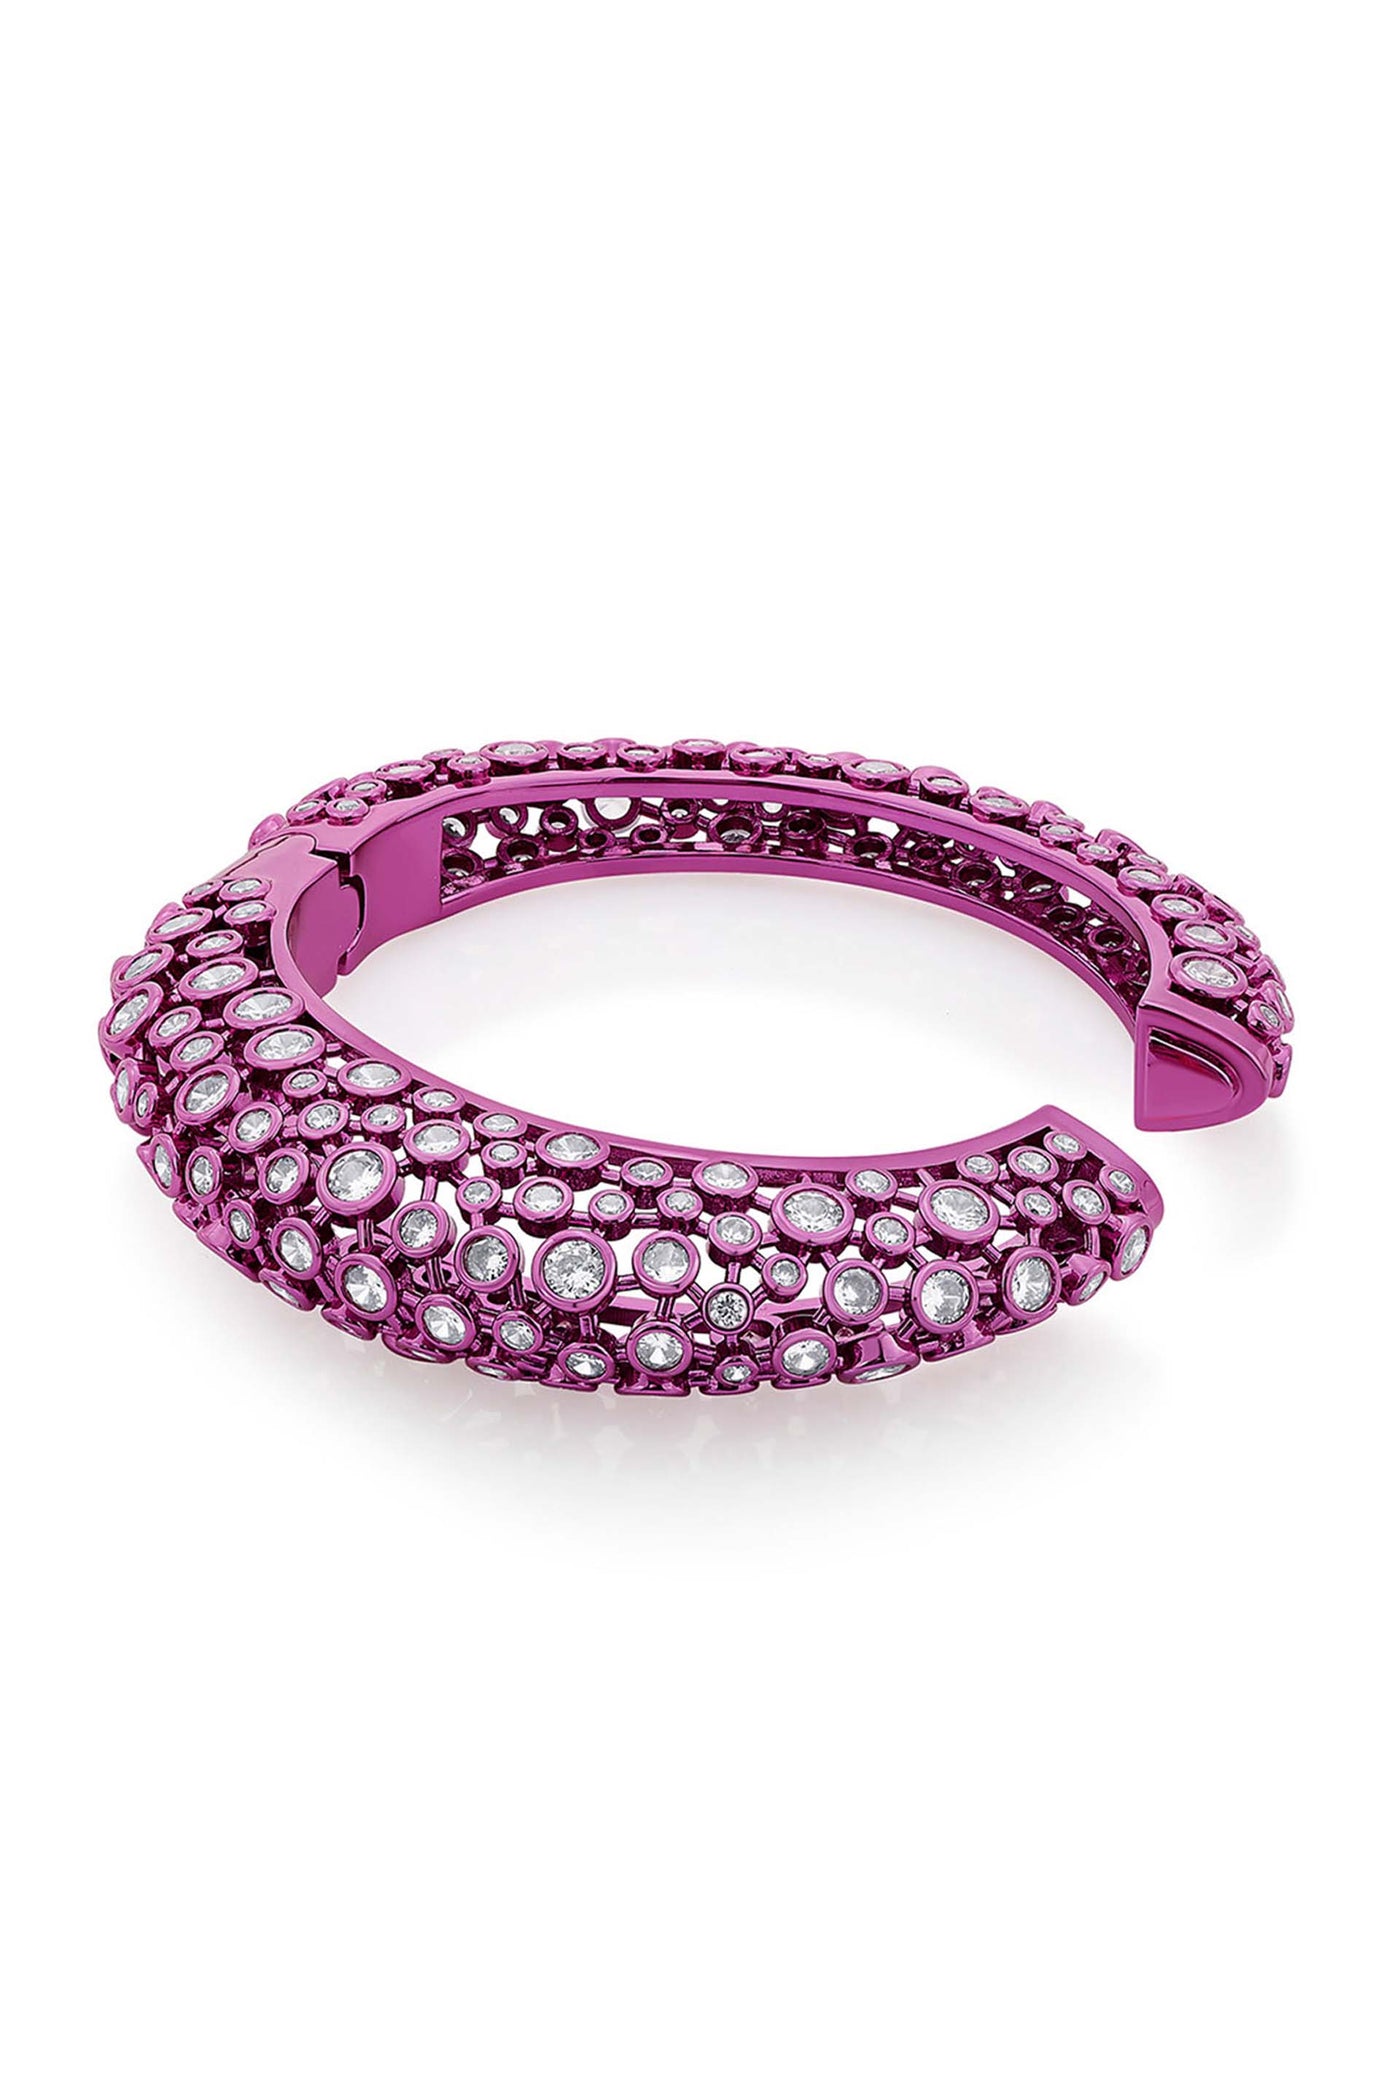 Isharya Rani Pink Oval Hinge Bangle In Colored Plating fashion jewellery online shopping melange singapore indian designer wear